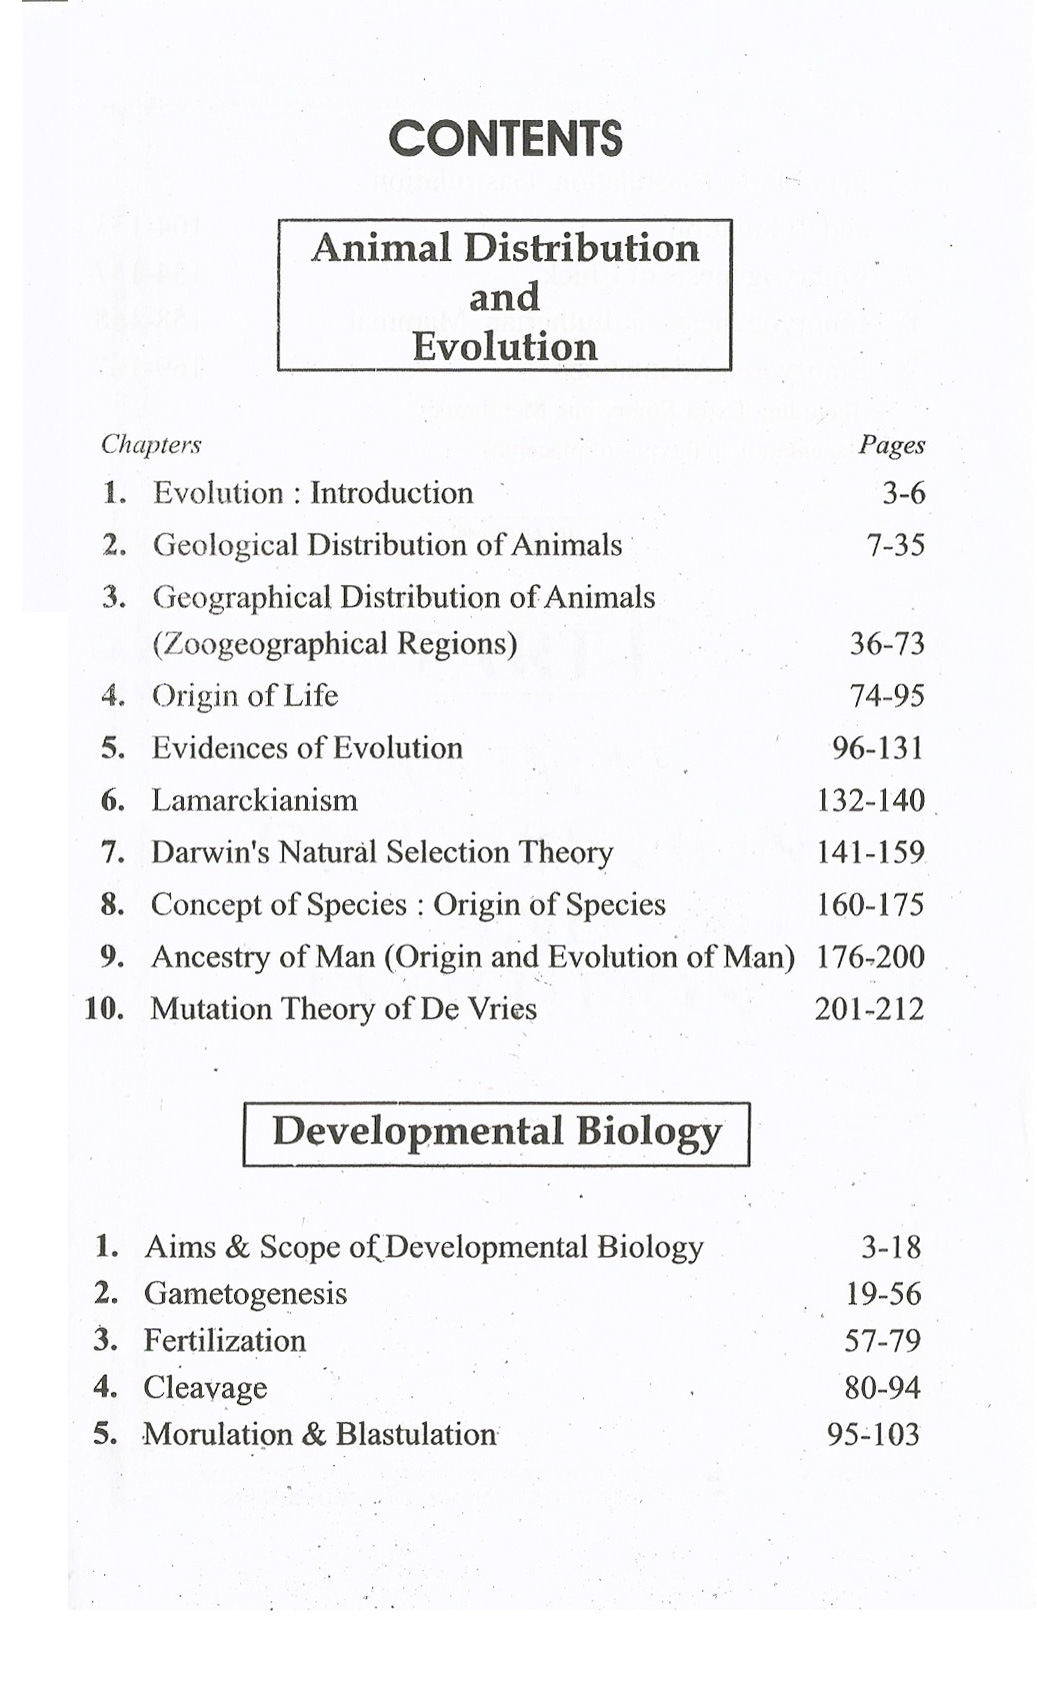 animal distribution evolution and development biology, sastry, tomar